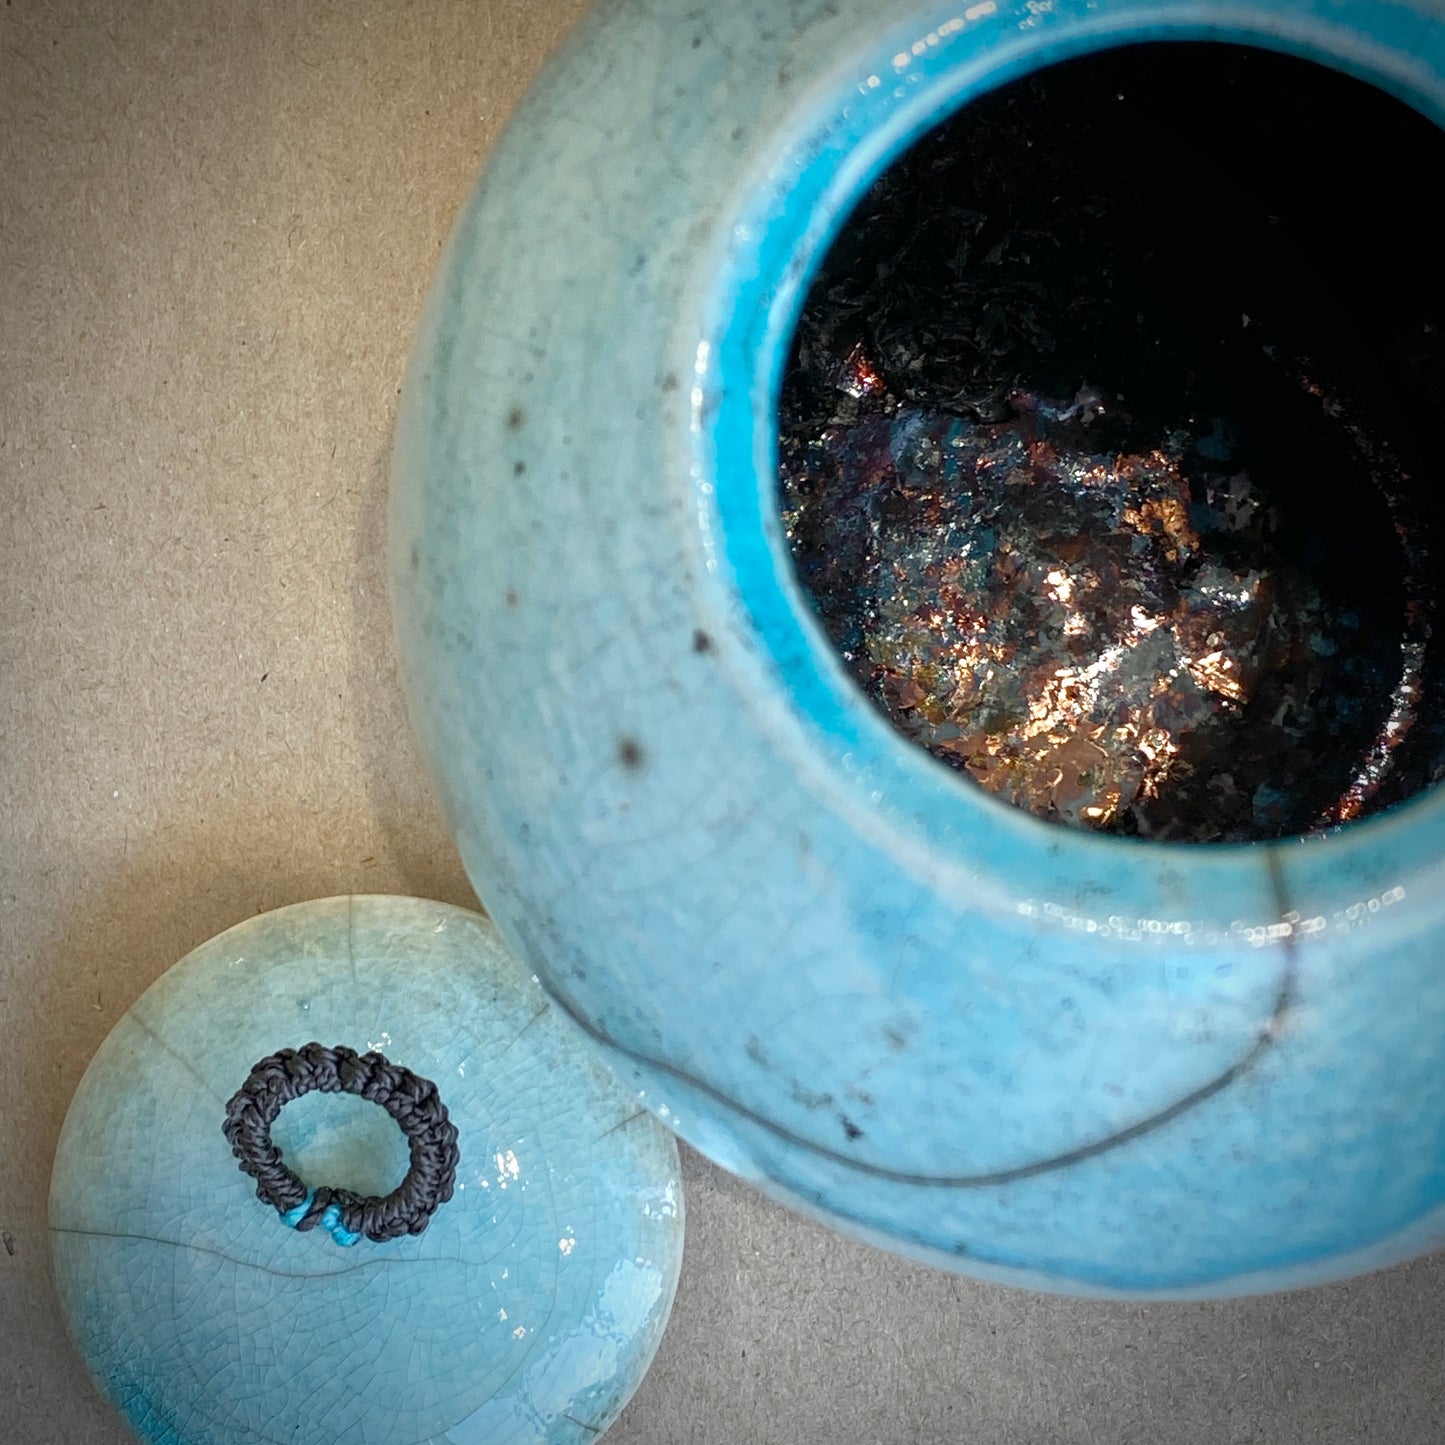 Load image into Gallery viewer, Medium Raku Fired Porcelain Jar (blue)
